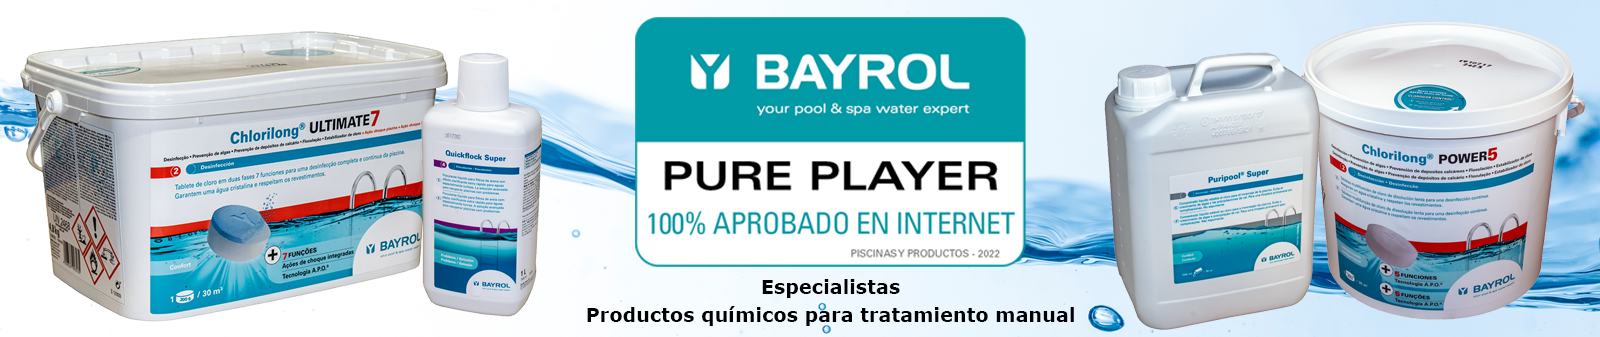 Banner-bayrol-prodotti-chimici-w.png